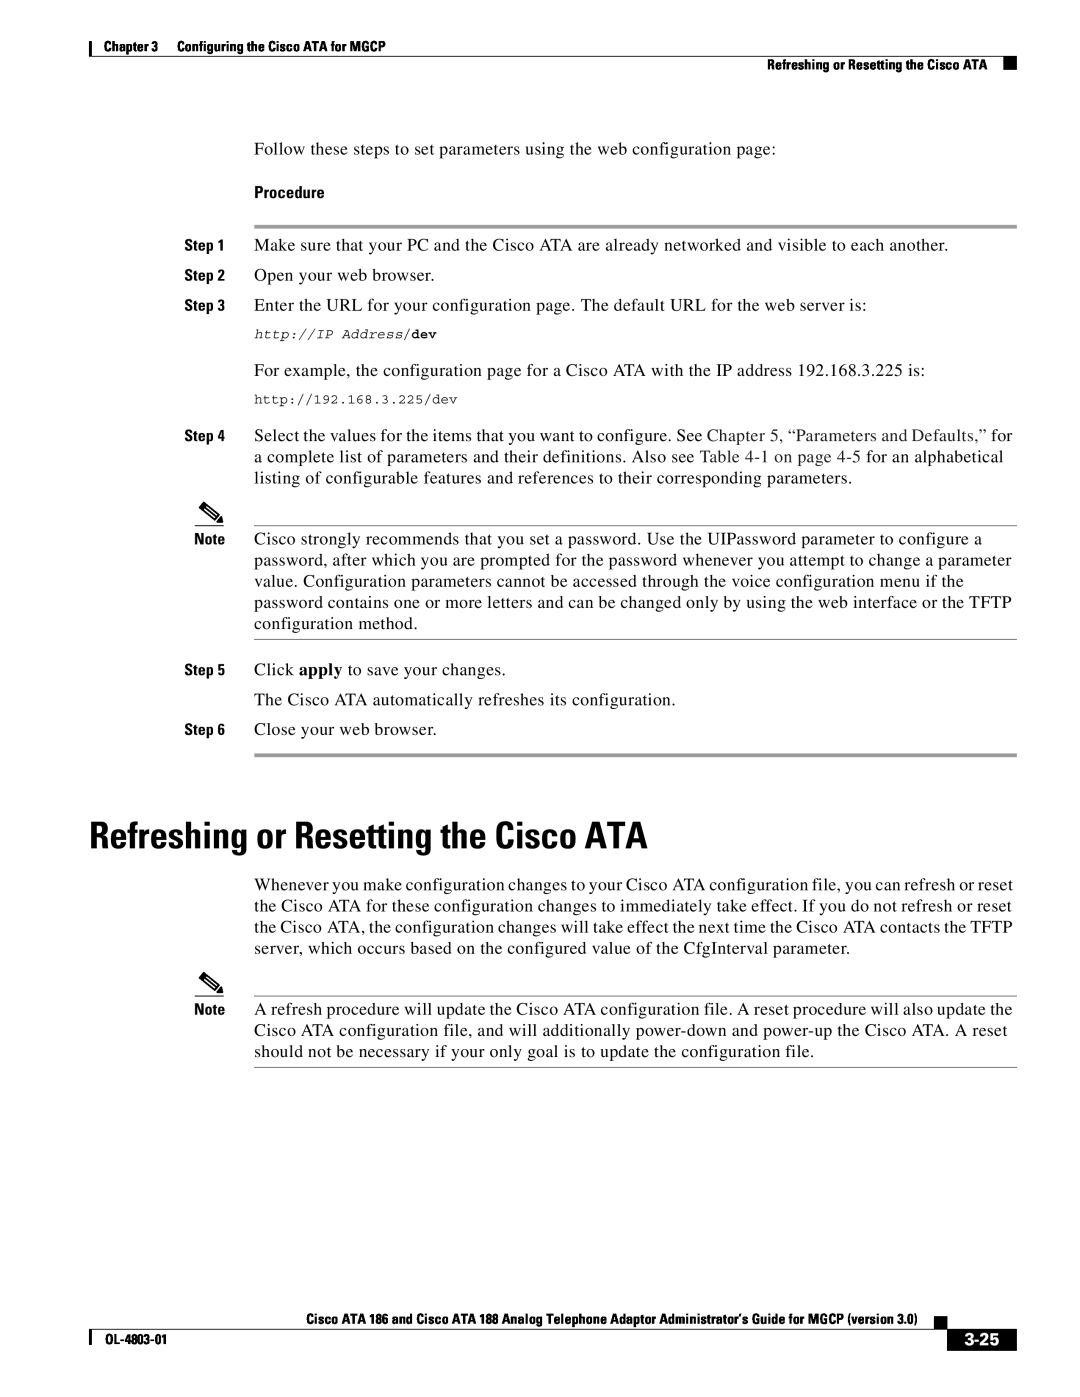 Cisco Systems ATA 186 manual Refreshing or Resetting the Cisco ATA, 3-25, Procedure 